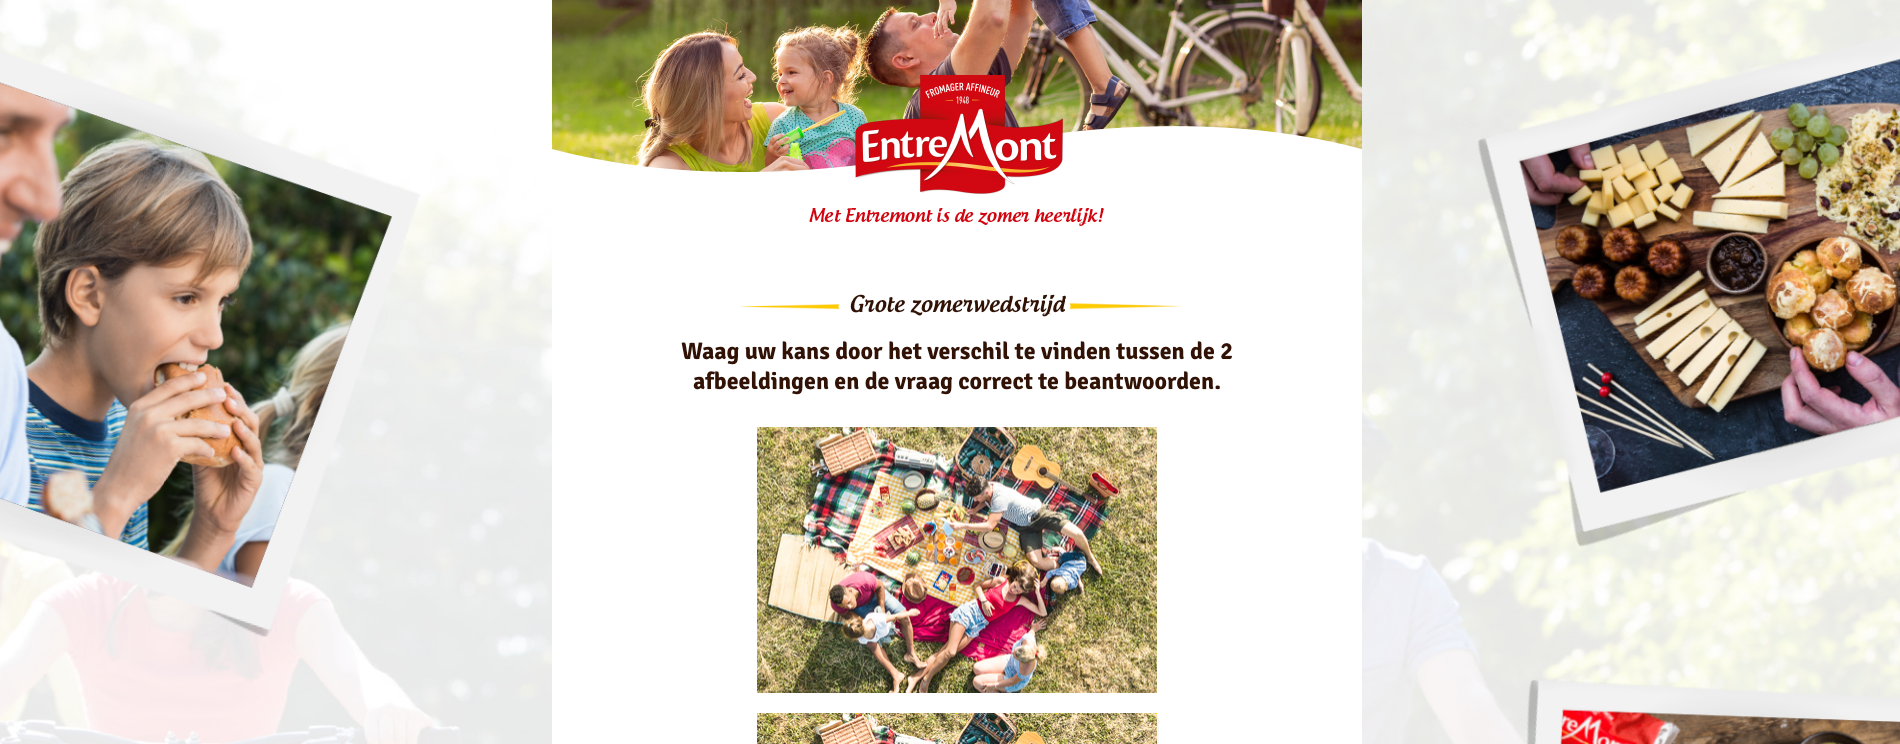 entremont-contest-marketing-summer